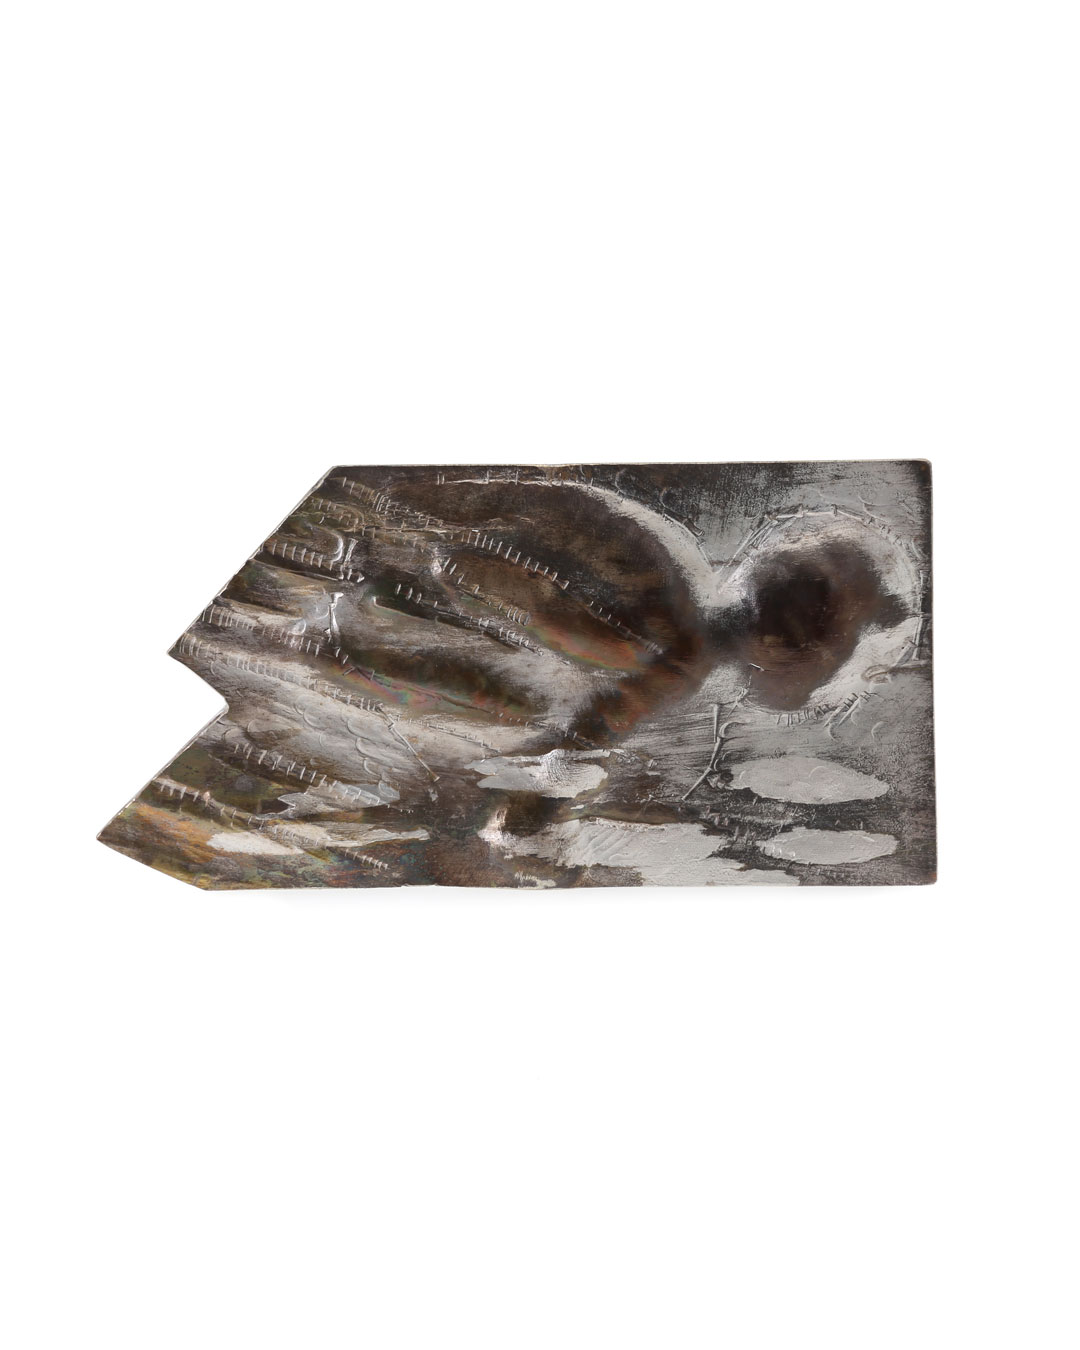 Rudolf Kocéa, Der Sprung (The Leap), 2017, brooch, silver, copper, 130 x 70 x 8 mm, €2400